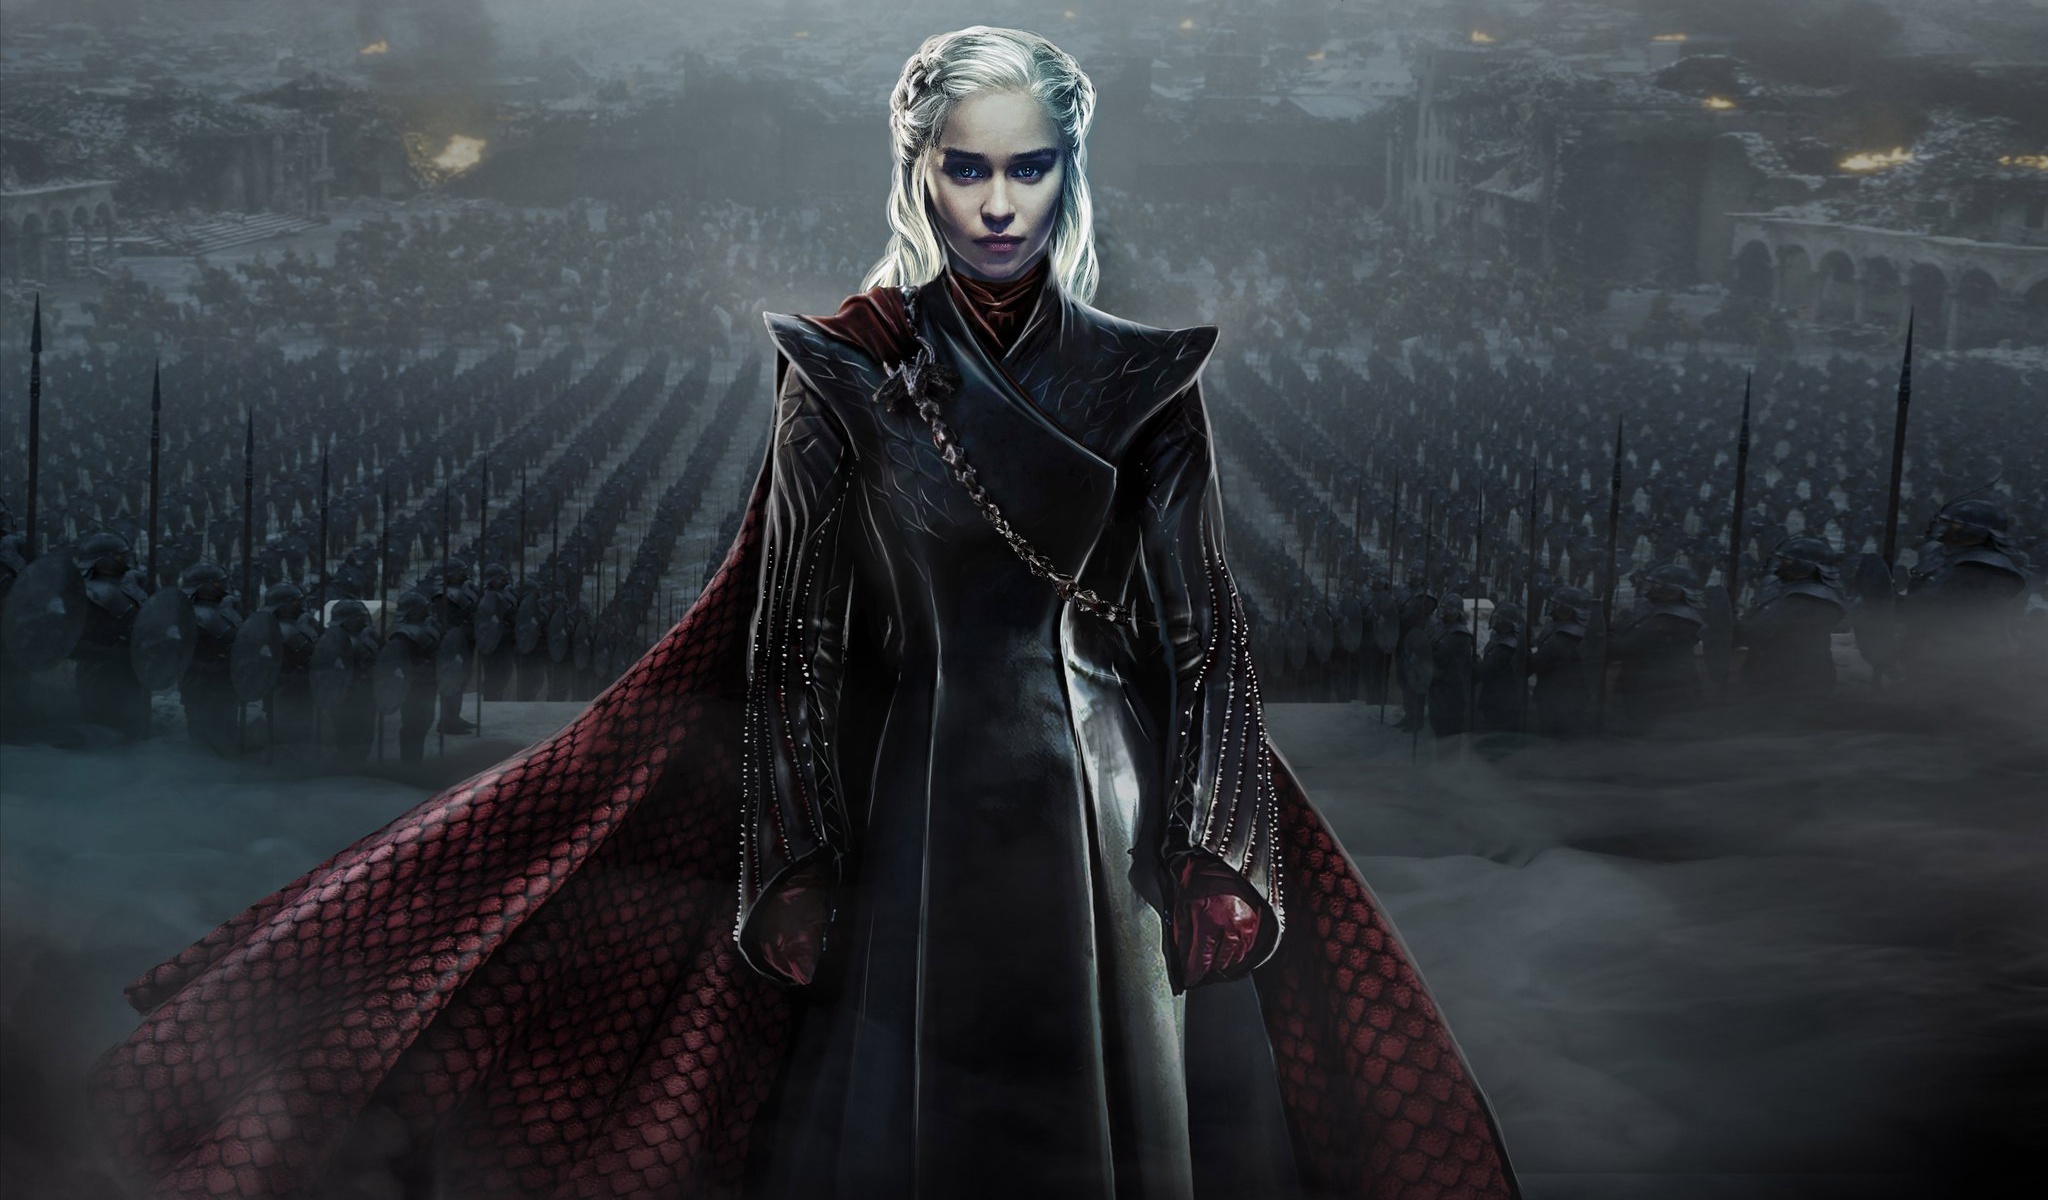 General 2048x1200 Game of Thrones Daenerys Targaryen Emilia Clarke TV series army